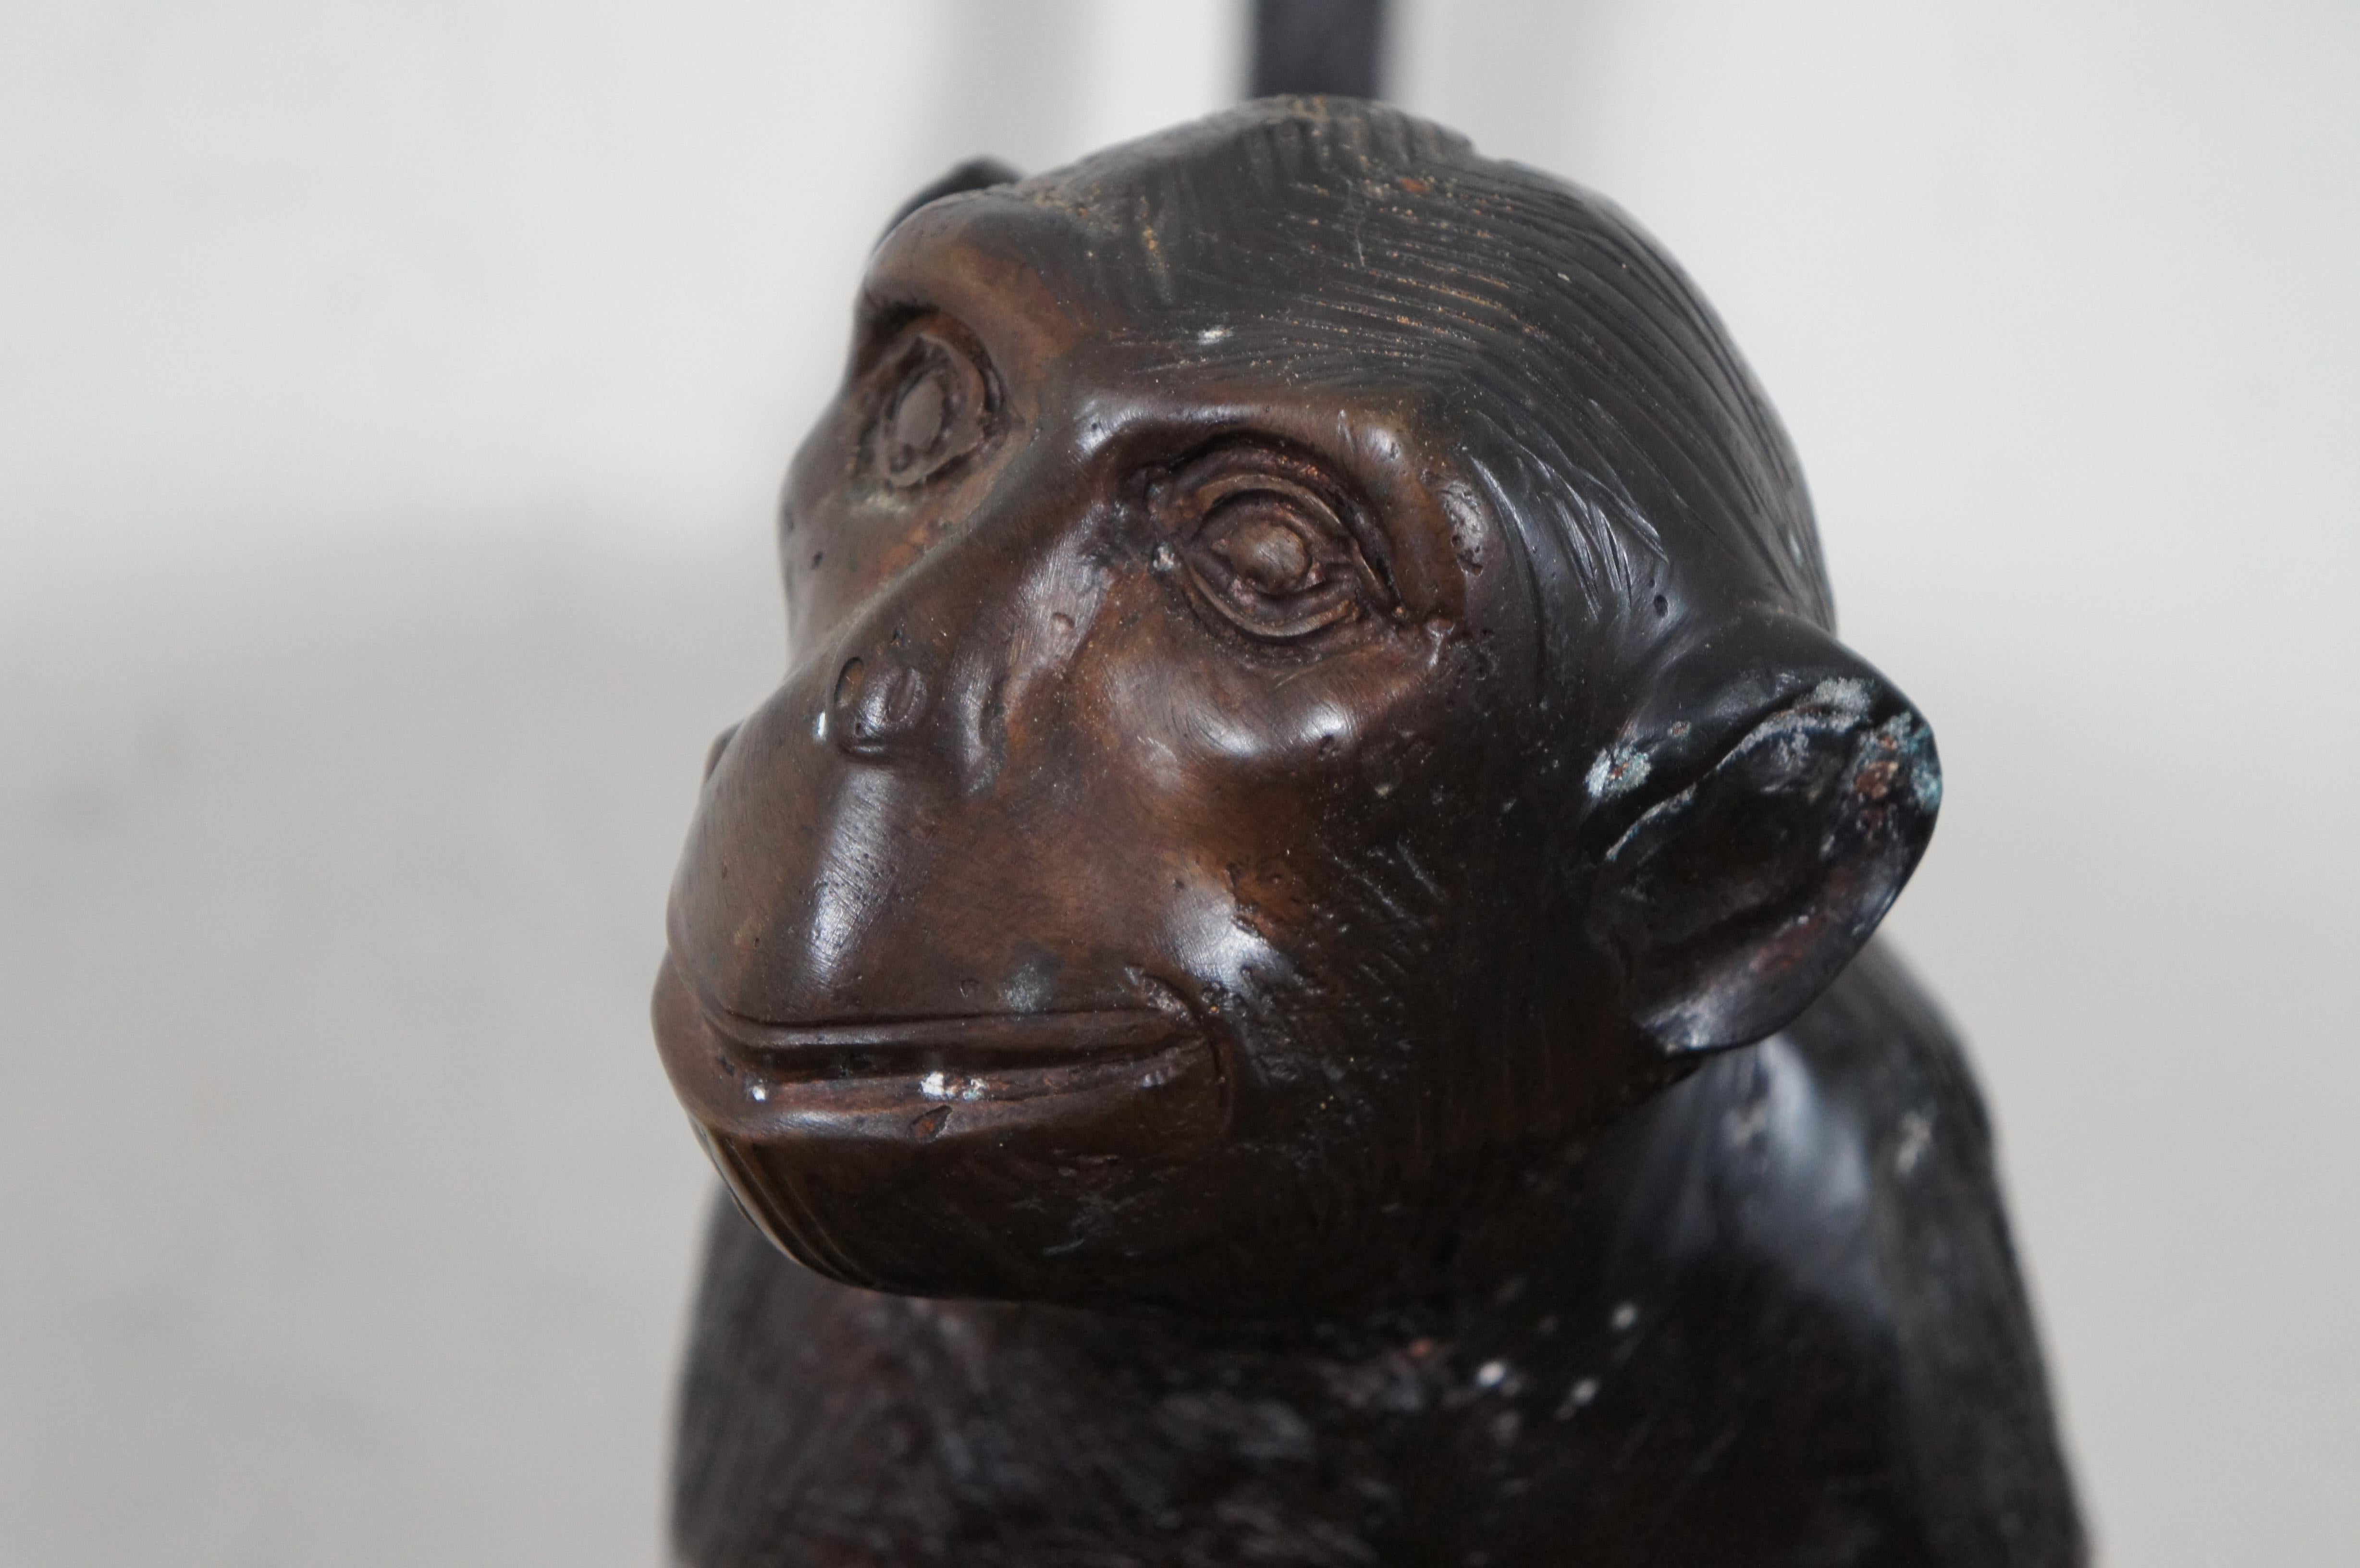 Maitland Smith Bronze Figural Monkey Sculpture Toilet Paper Holder 21